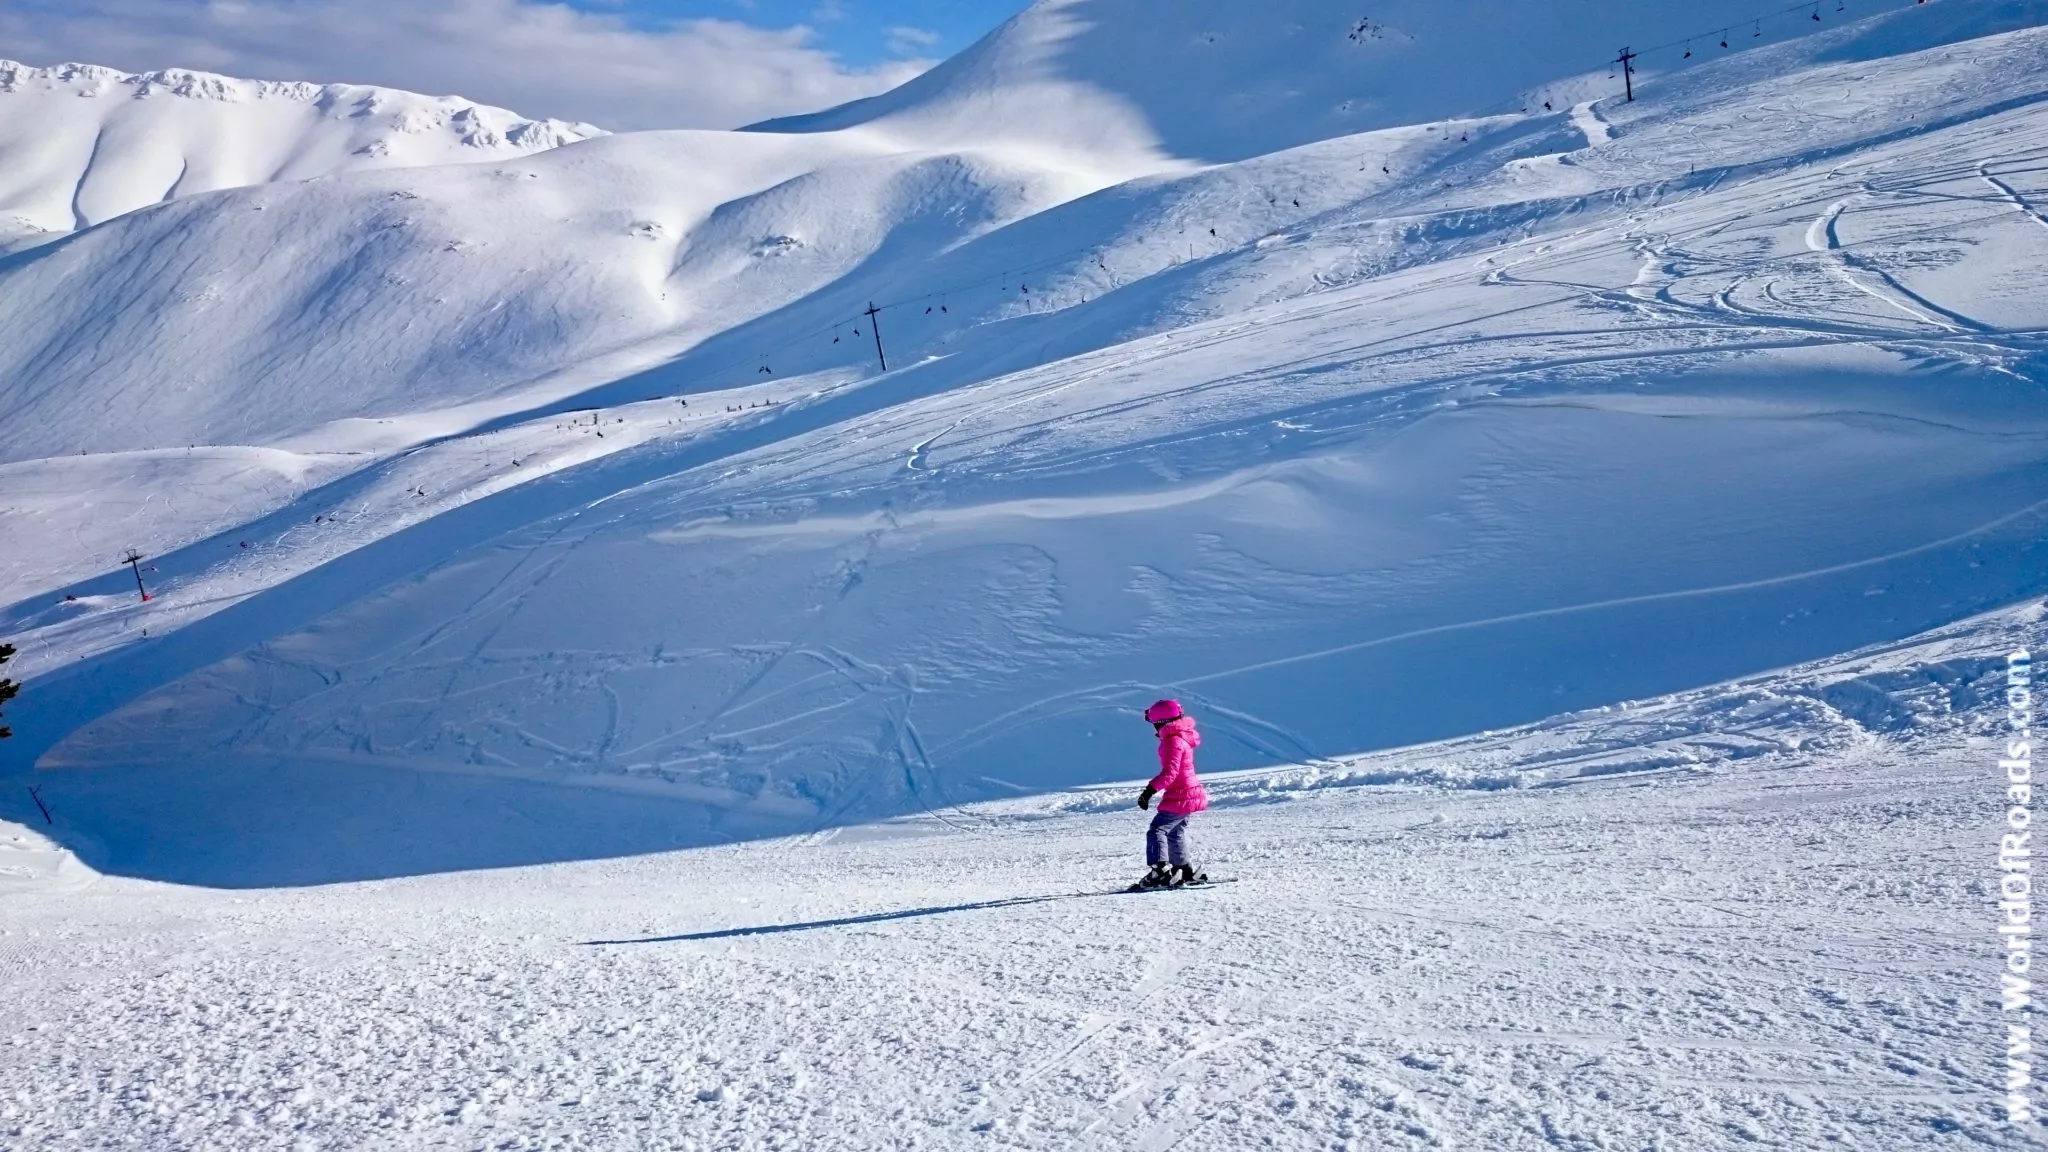 Davraz Ski Centre in Turkey, Central Asia | Snowboarding,Skiing - Rated 3.8